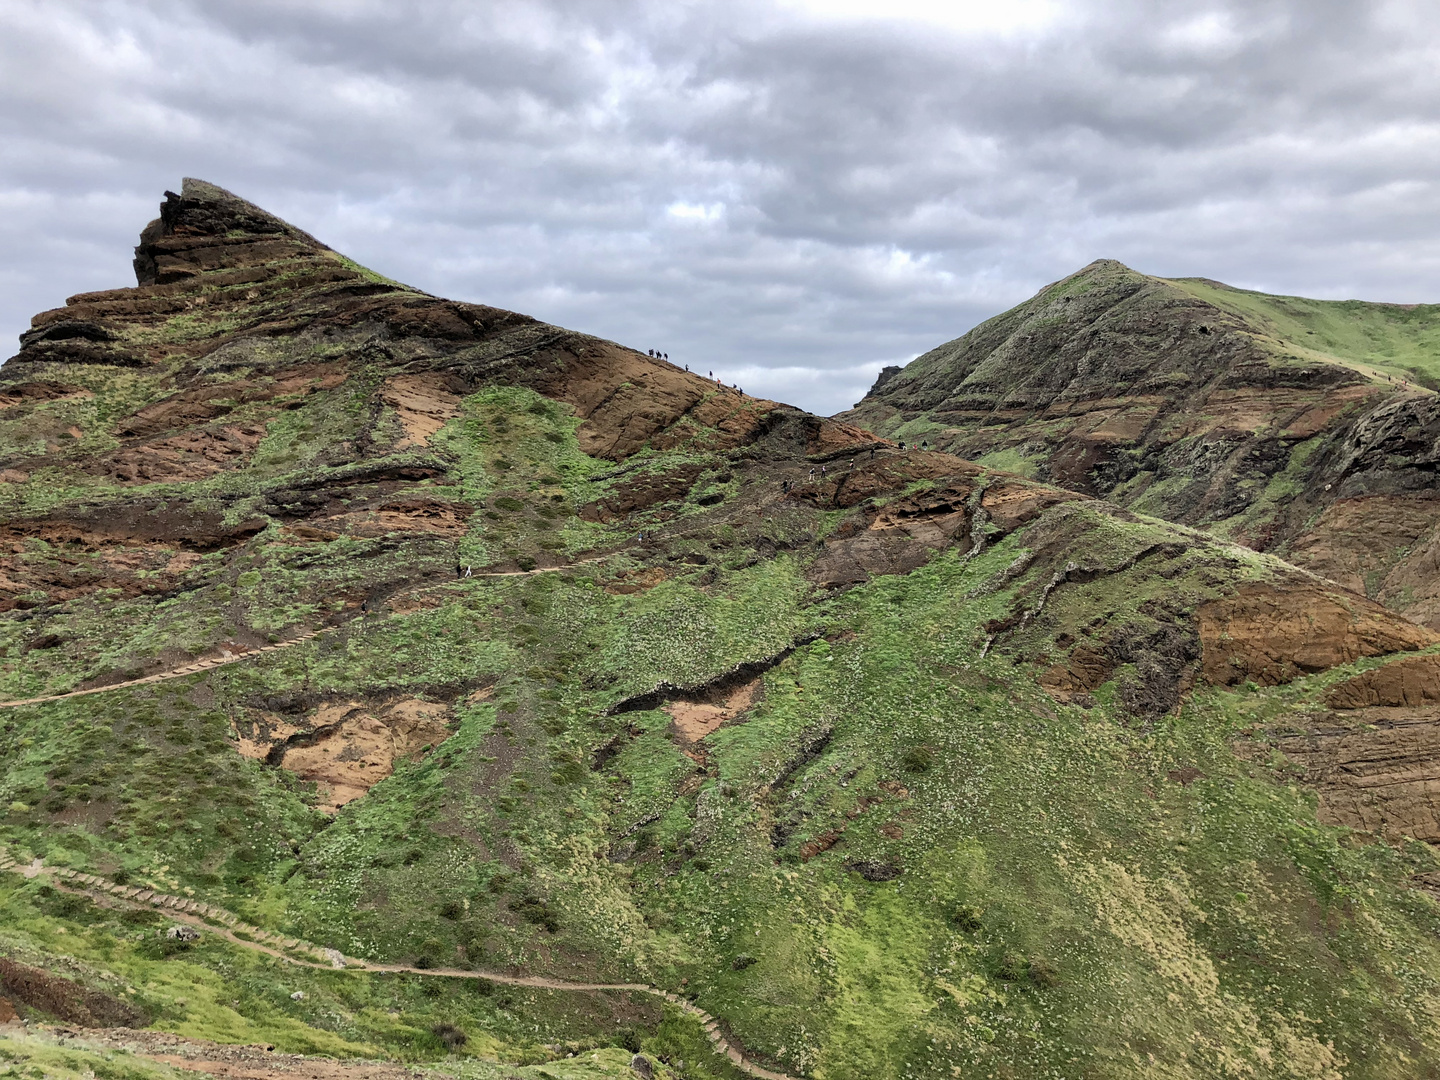 Wanderung im Osten Madeiras (8)